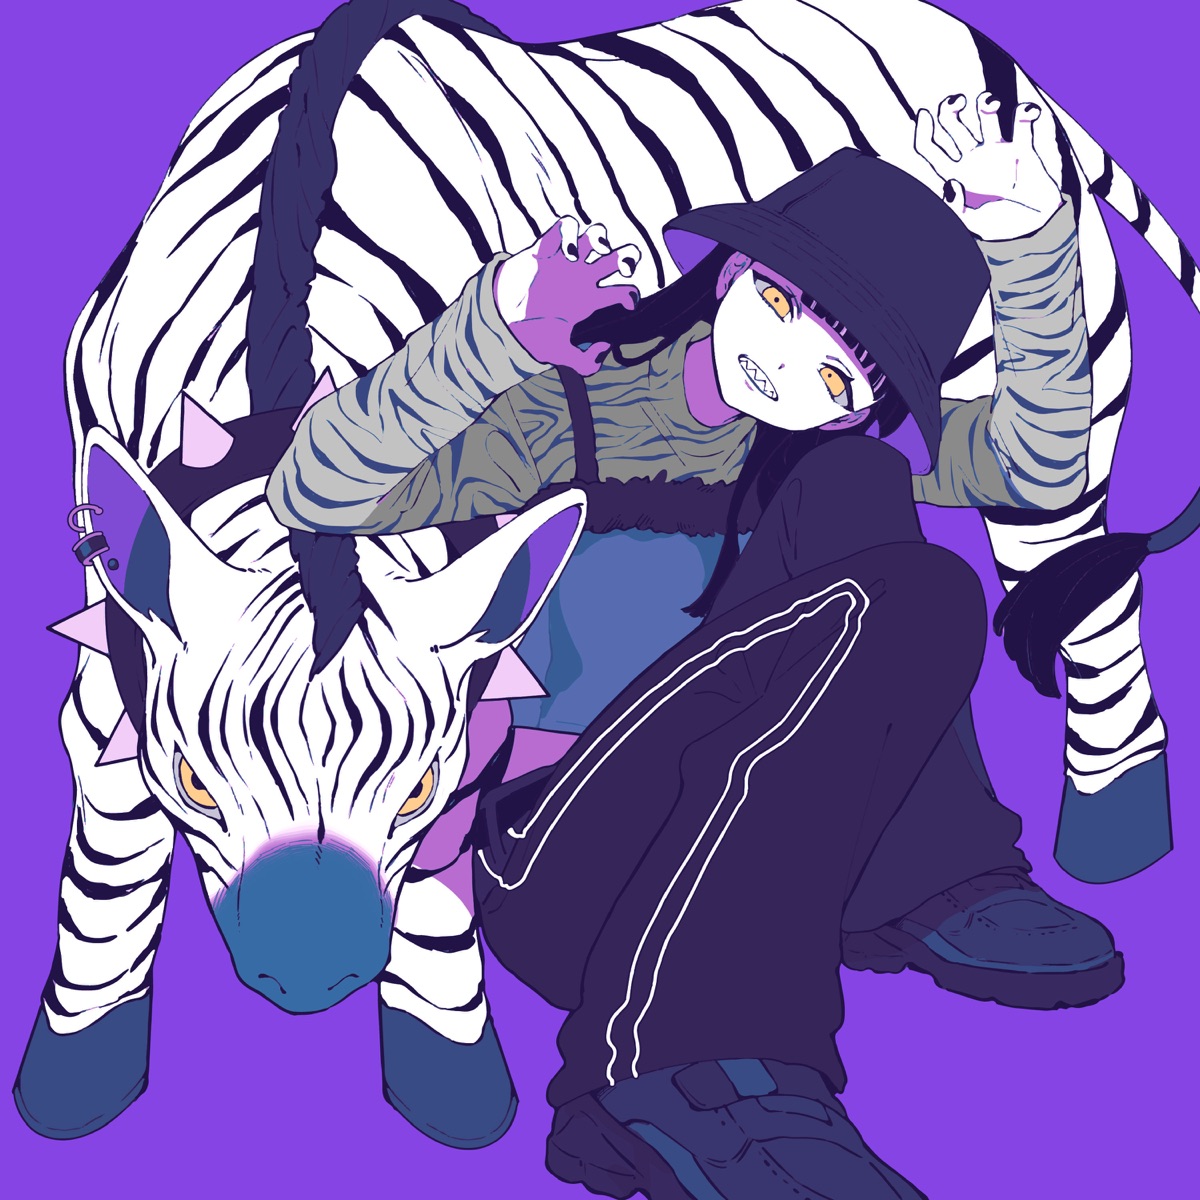 Cover art for『Three - Zebra』from the release『Zebra』